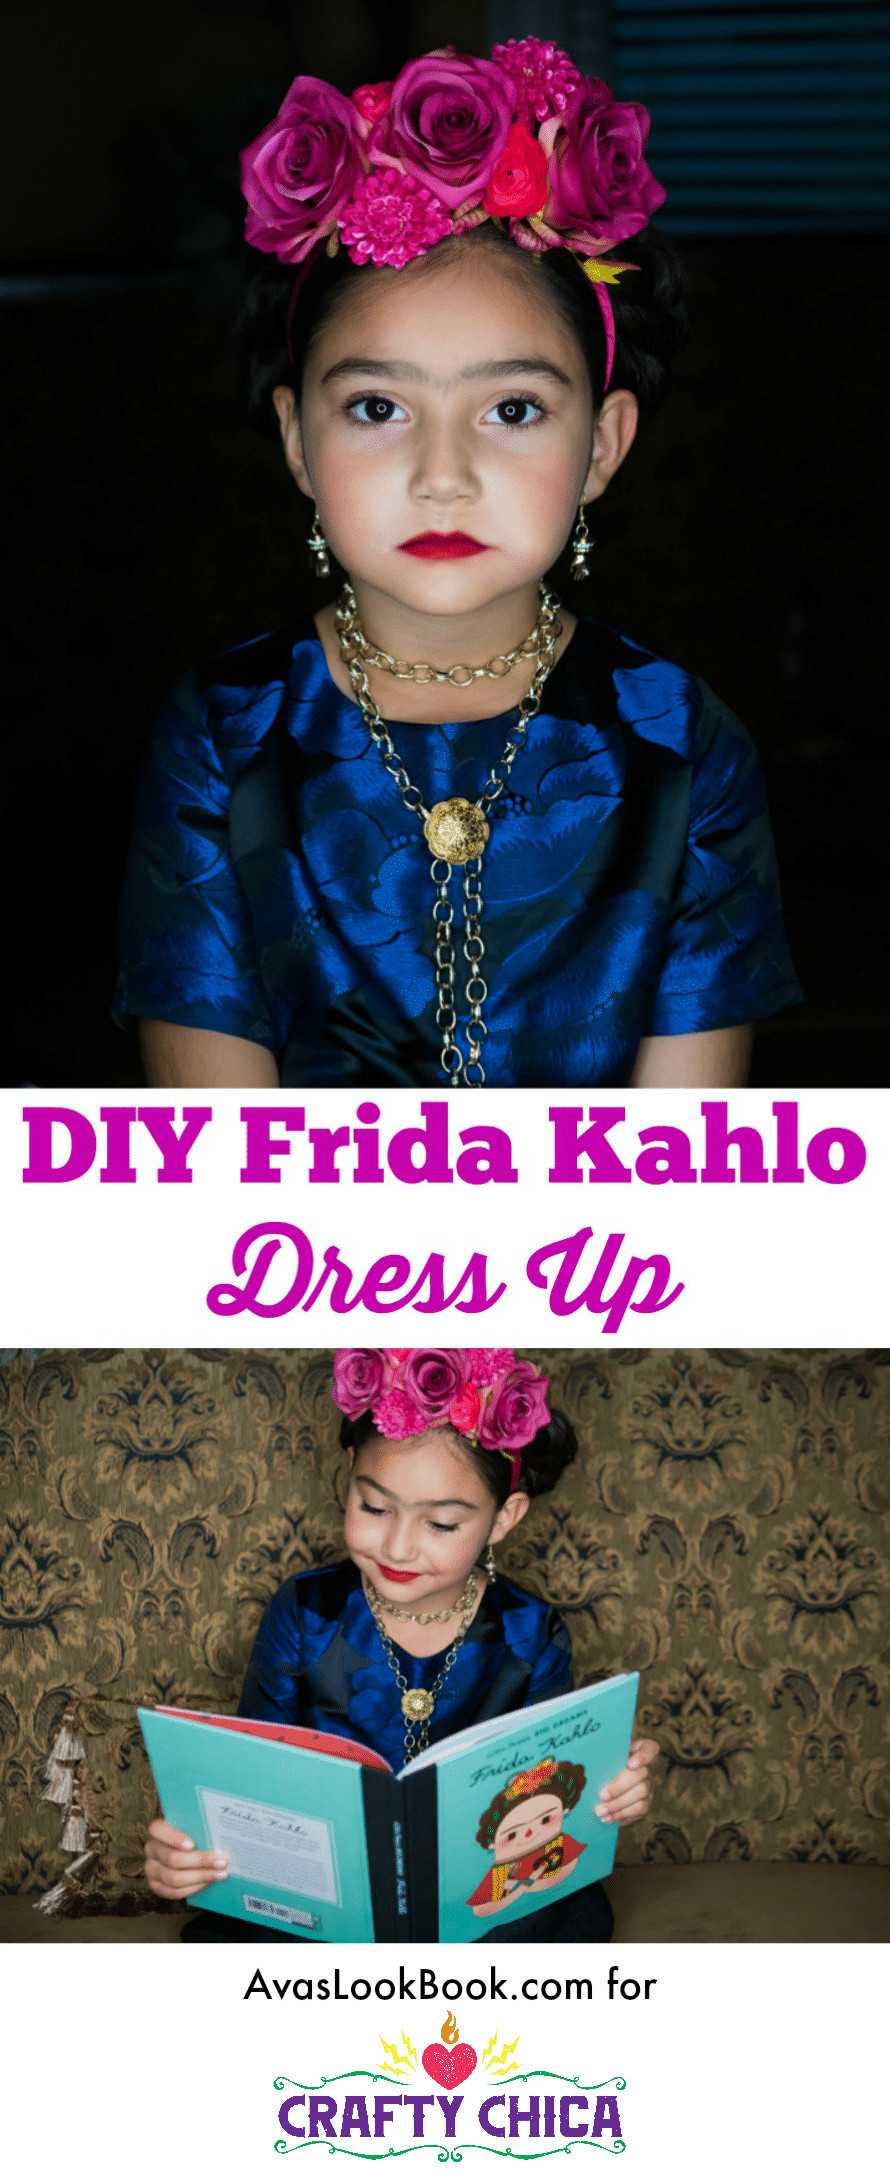 Best ideas about DIY Frida Kahlo Costume
. Save or Pin DIY Frida Kahlo Costume The Crafty Chica Now.